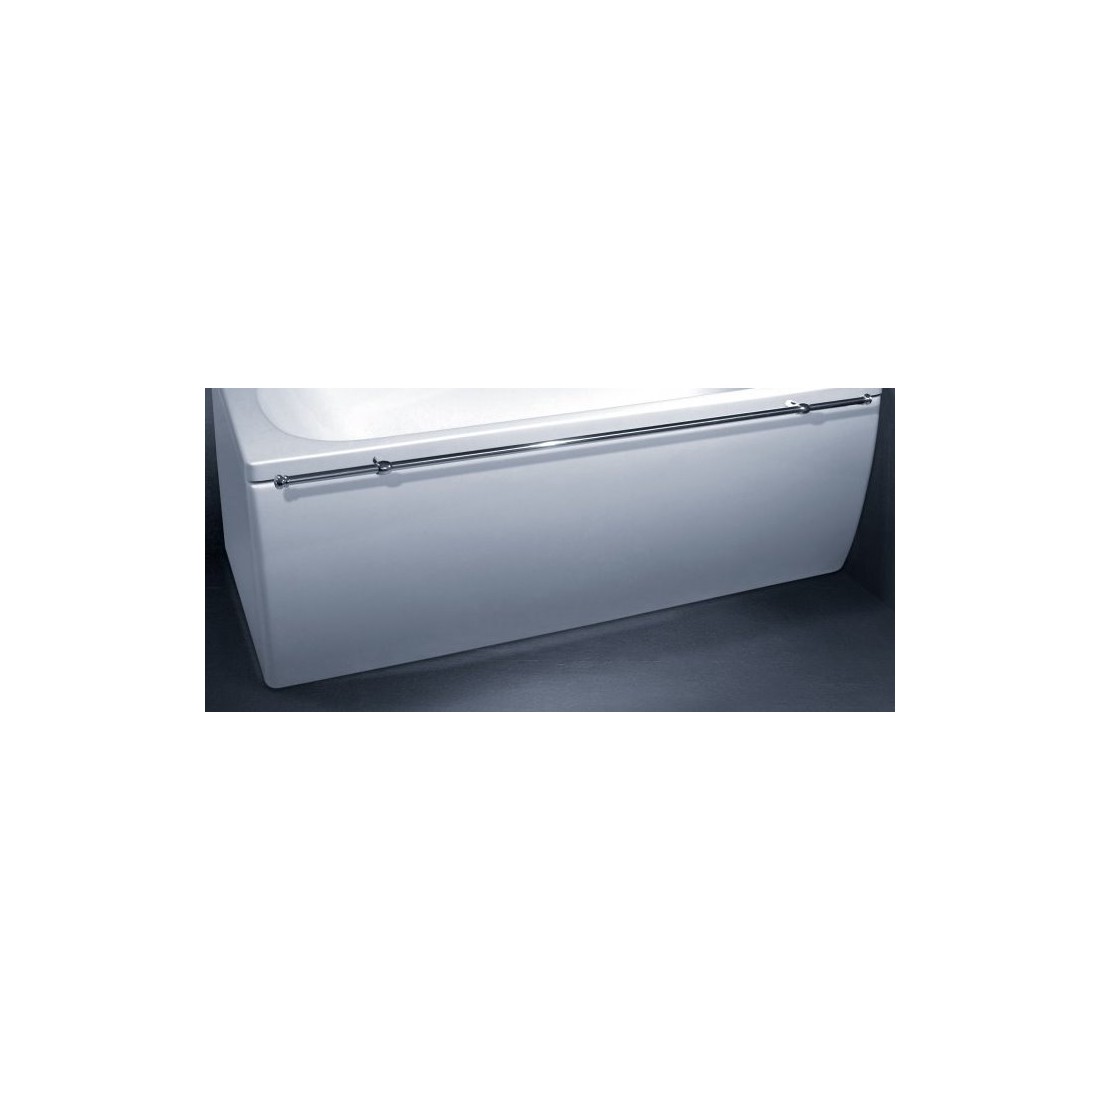 Apdaila voniai Vispool Classica balta, 150, L formos dešinės pusės